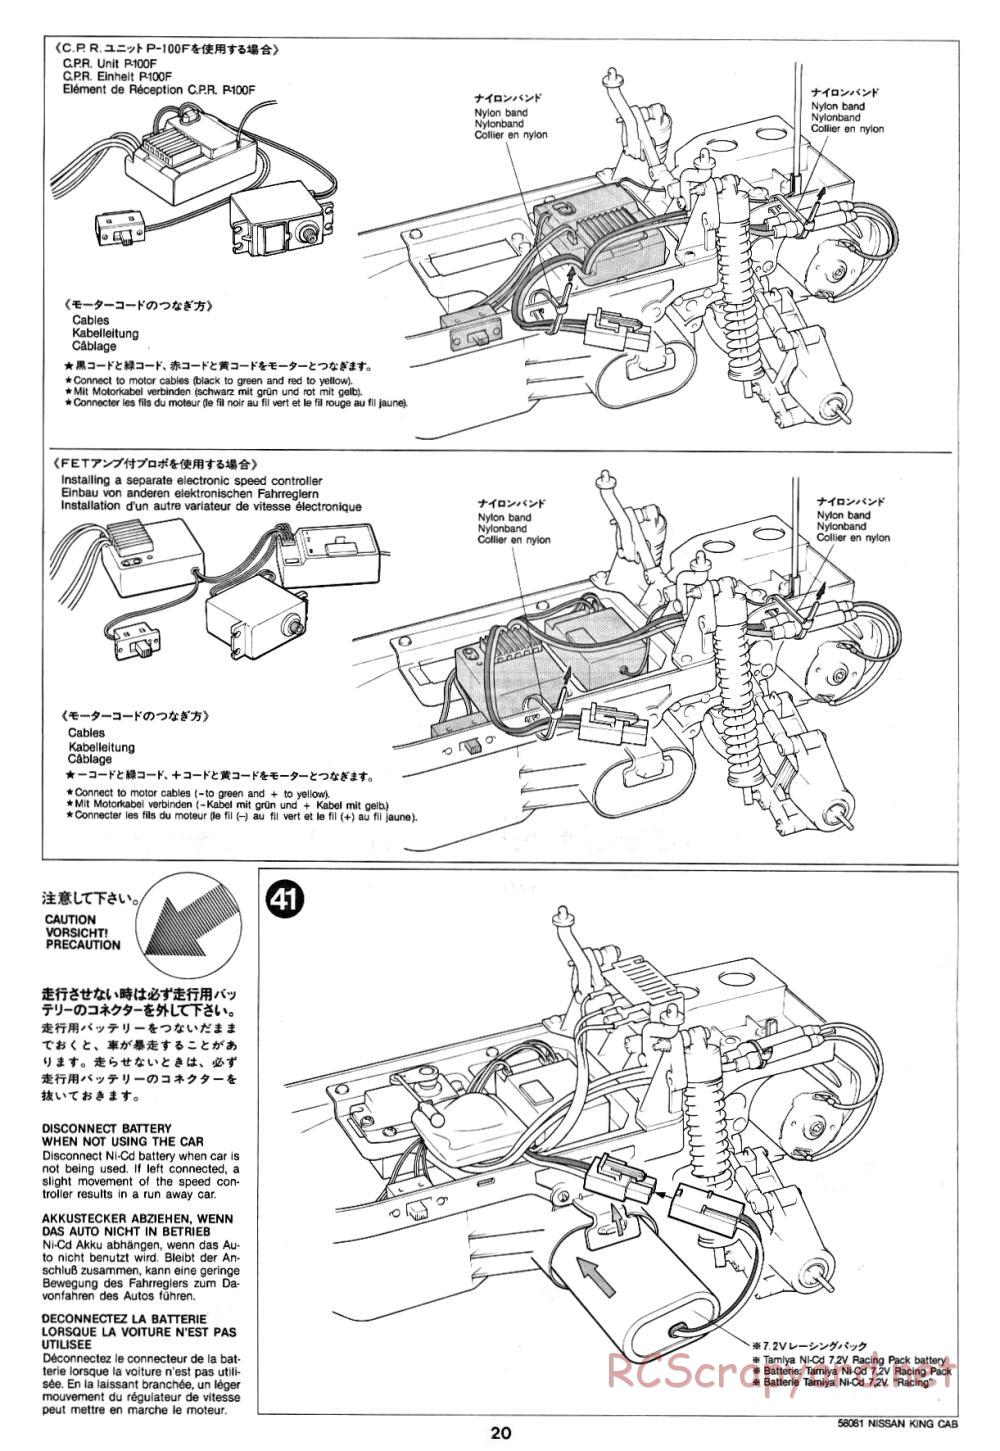 Tamiya - Nissan King Cab - 58081 - Manual - Page 20